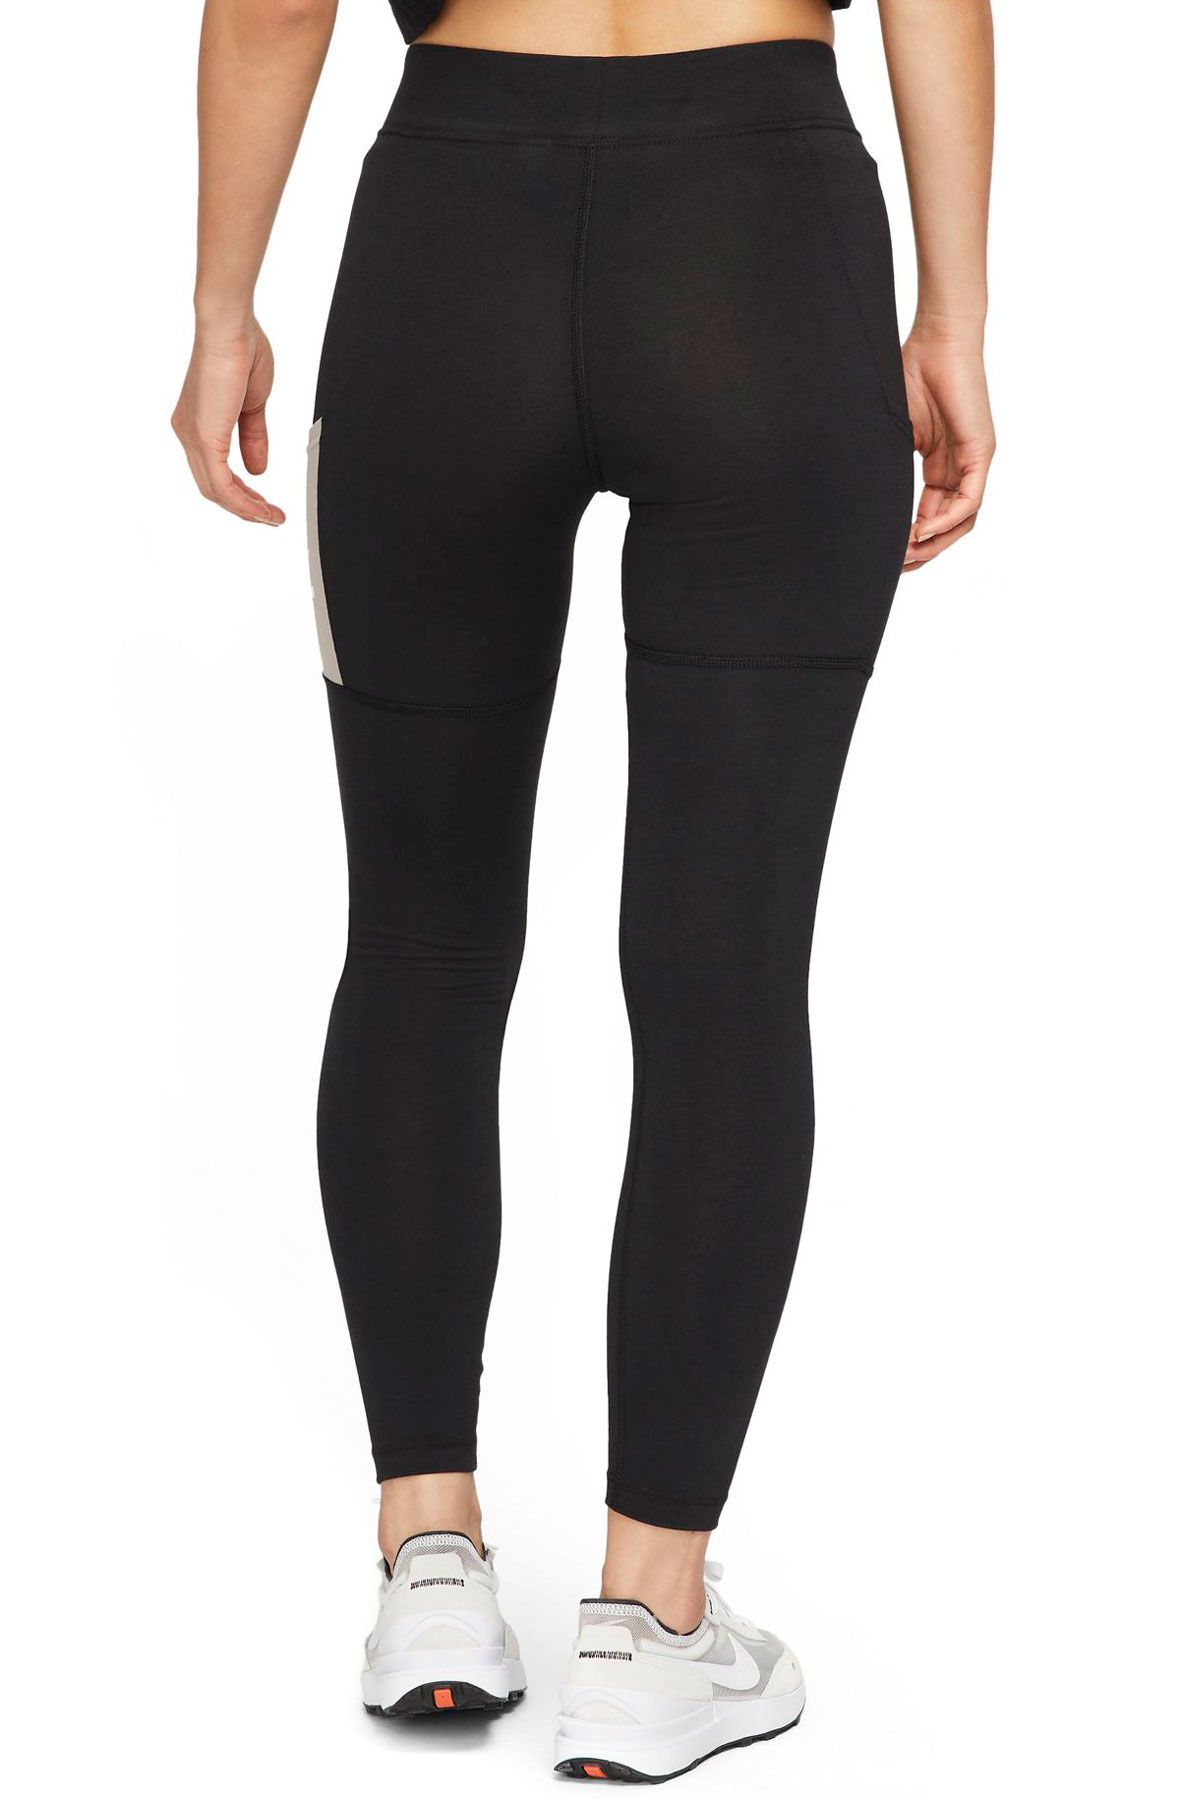 Sport leggings for Women ESSNT GX MR LGGNG SWSH Nike CZ8530 010 Black